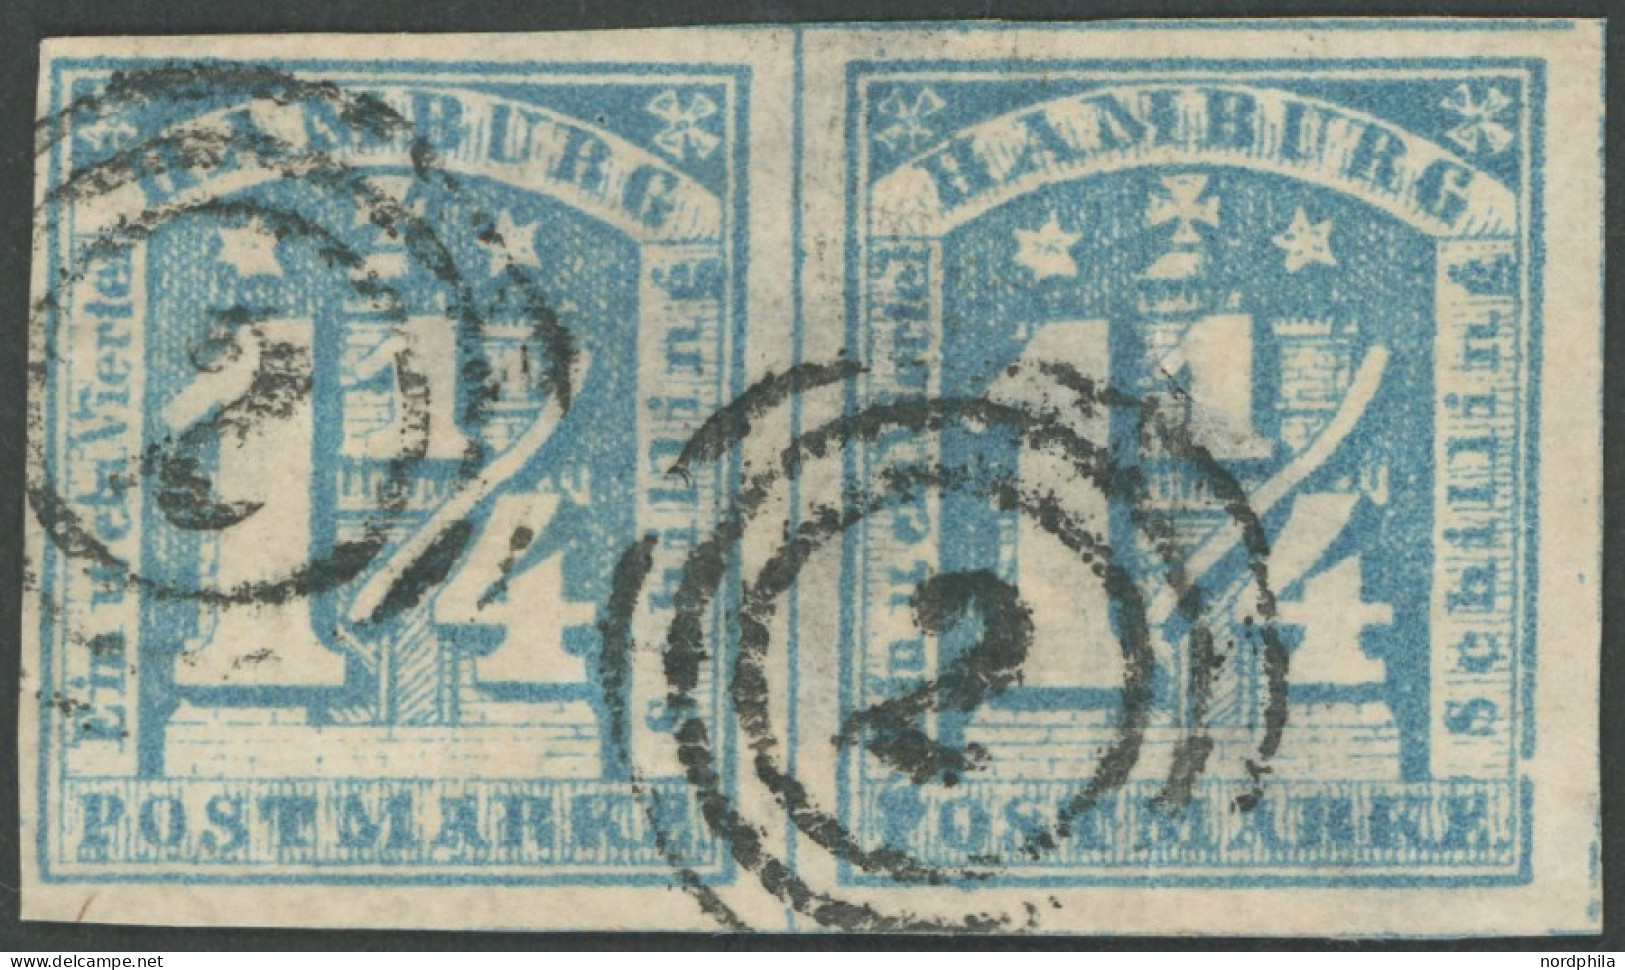 HAMBURG 8g  Paar O, 1864, 11/4 S. Stumpfblau Im Waagerechten Voll-breitrandigen Paar, Rückseitig Große Dünne Stelle, Fot - Hambourg